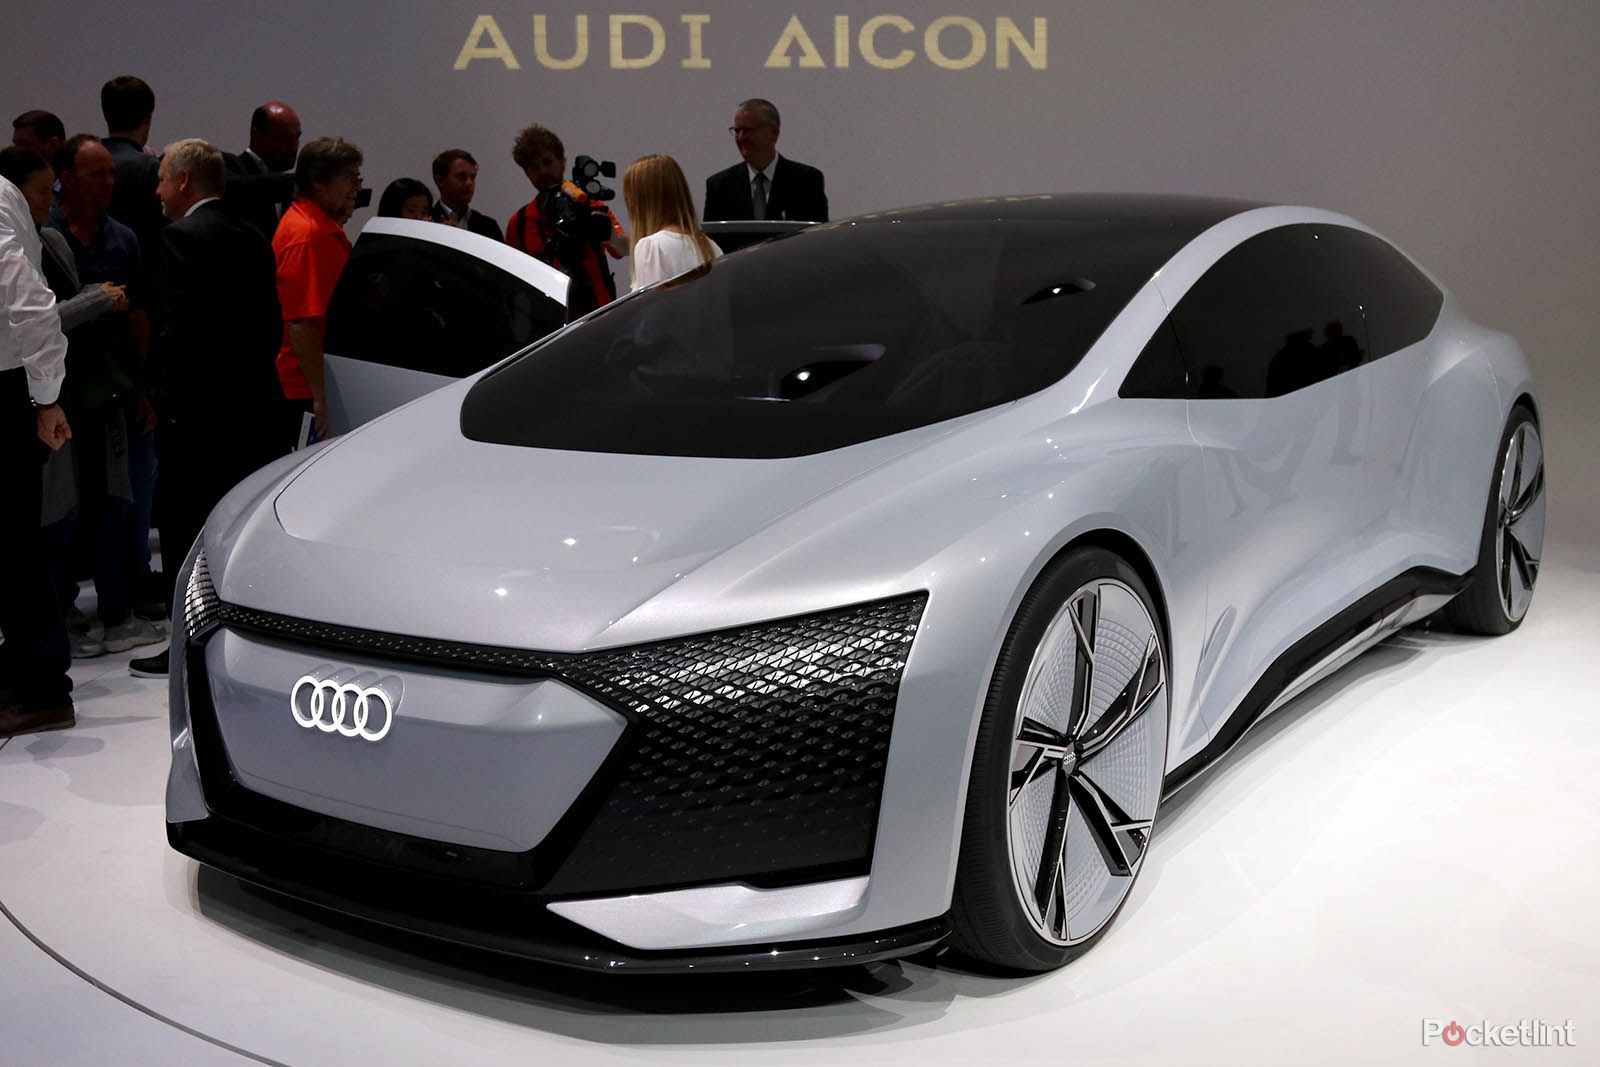 Audi Aicon concept in pictures image 1